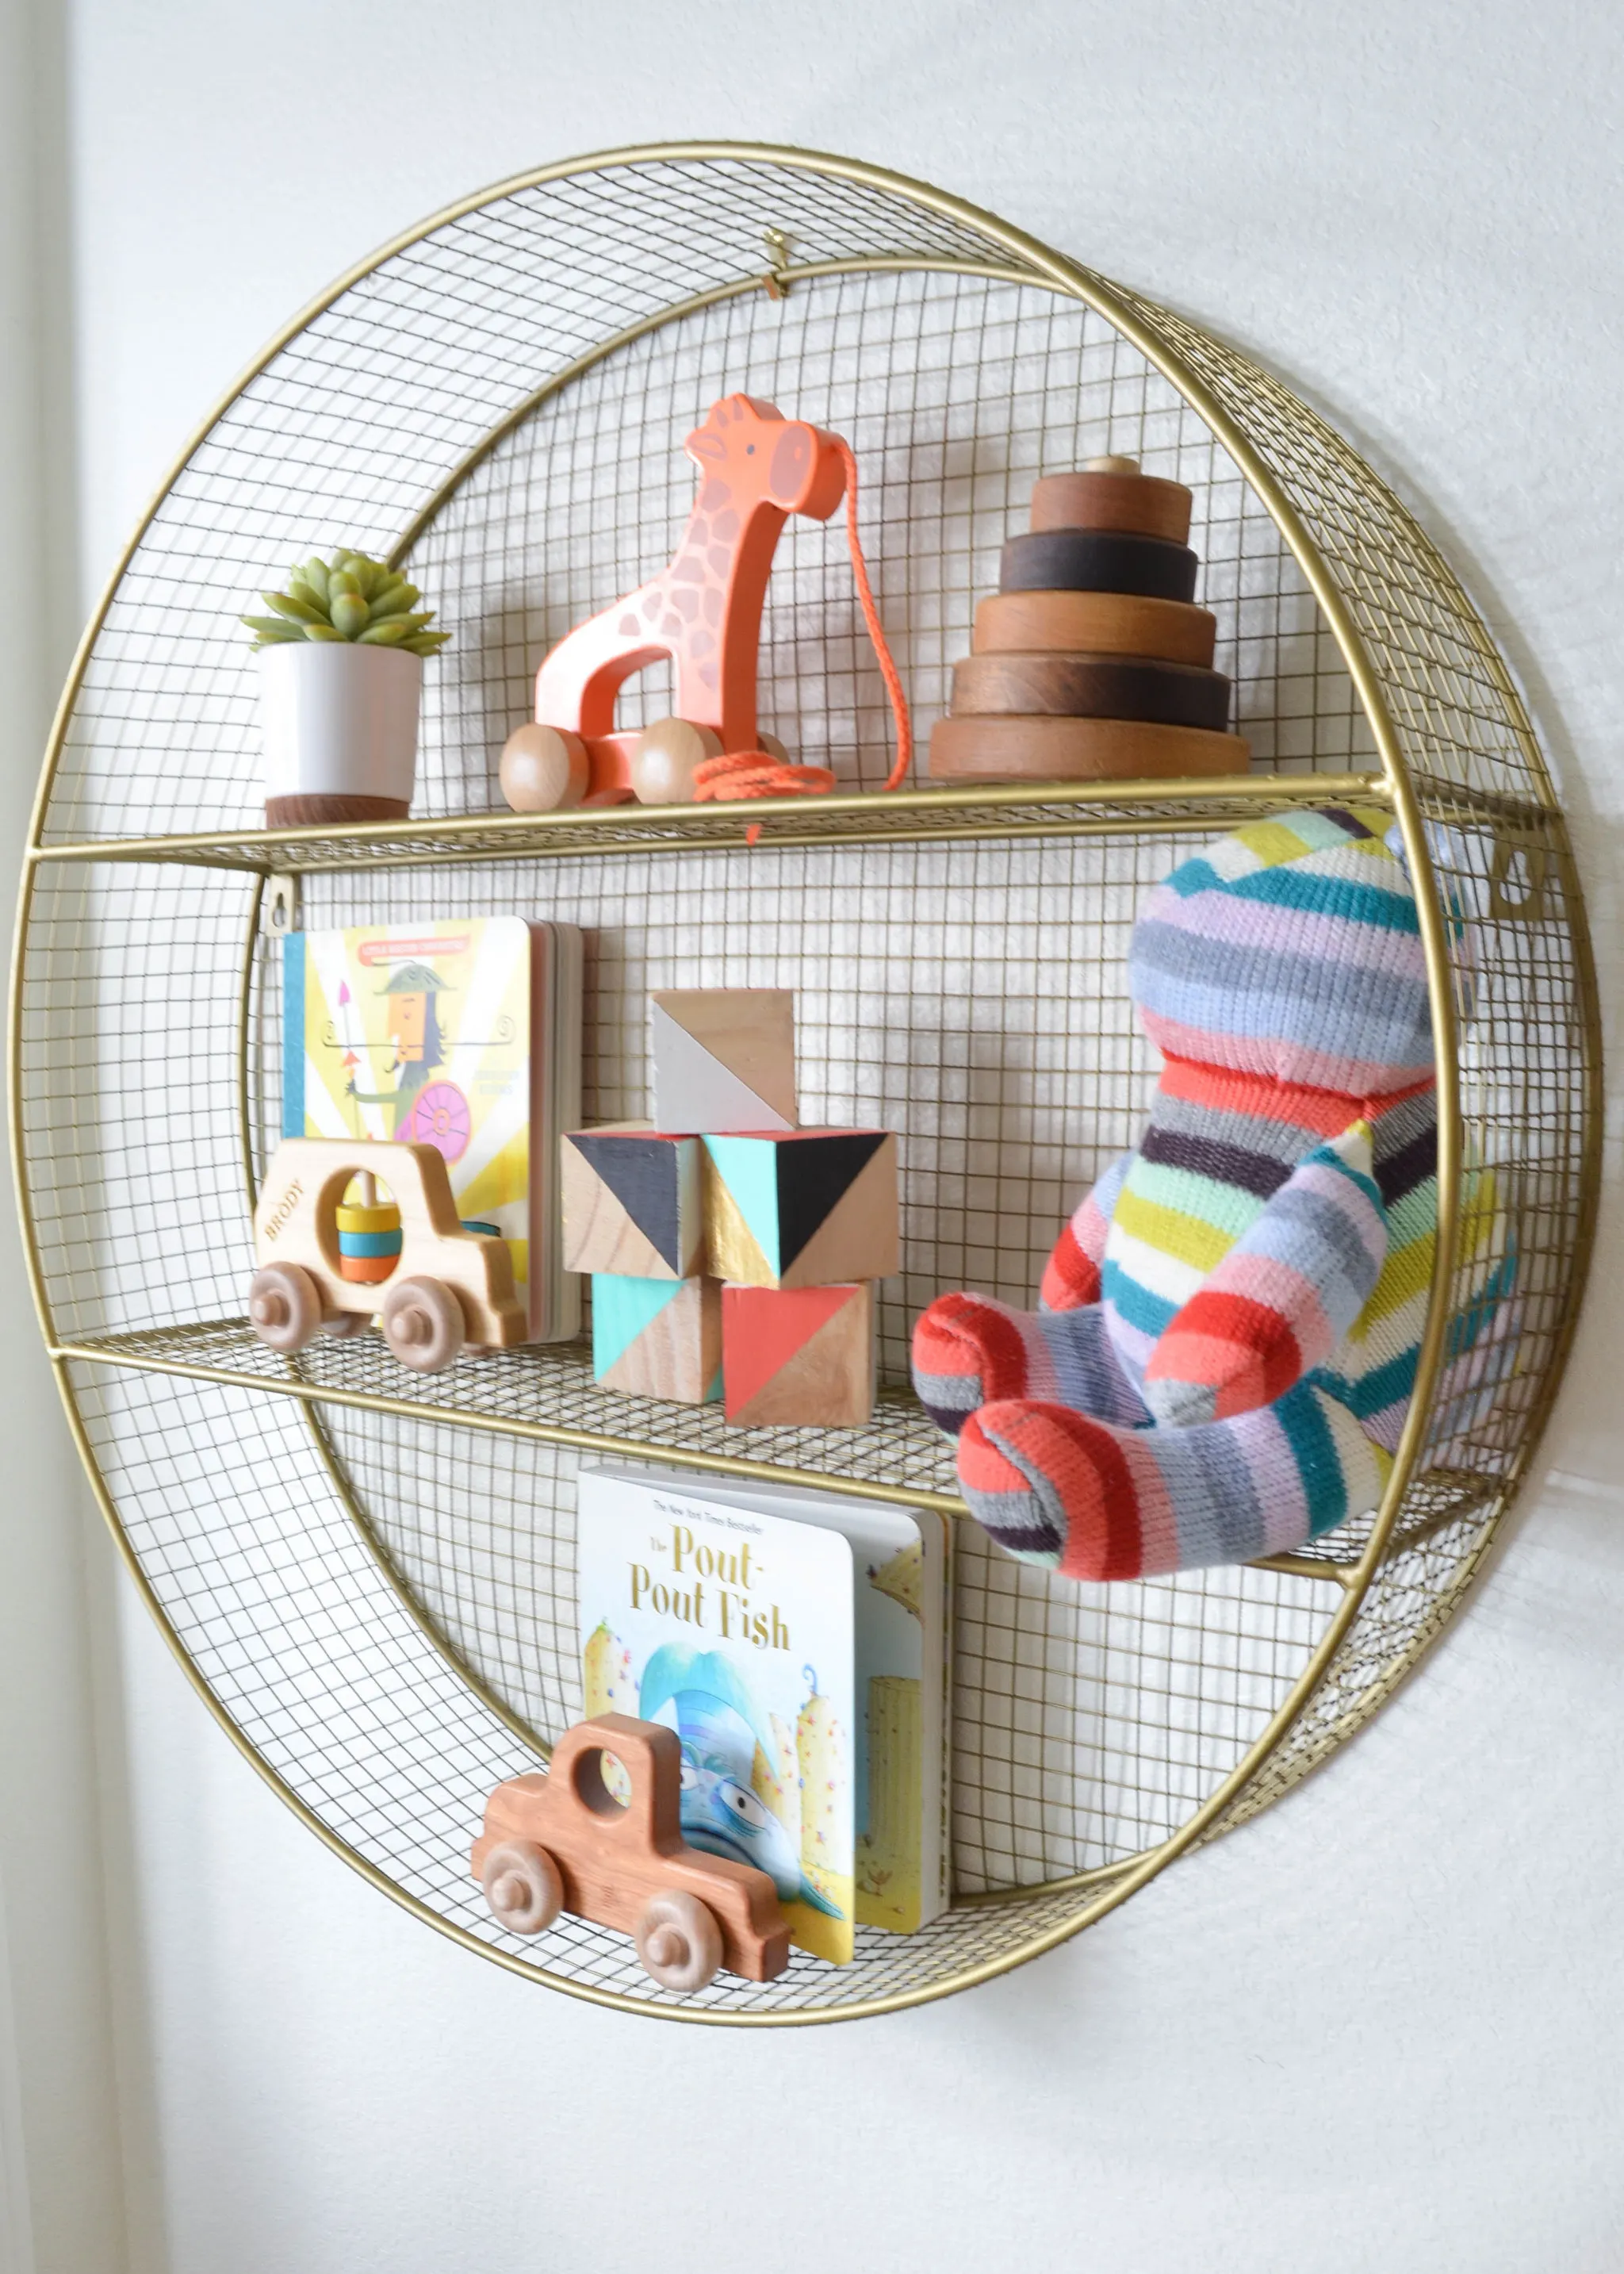 Toy Storage and Circular Display Shelf